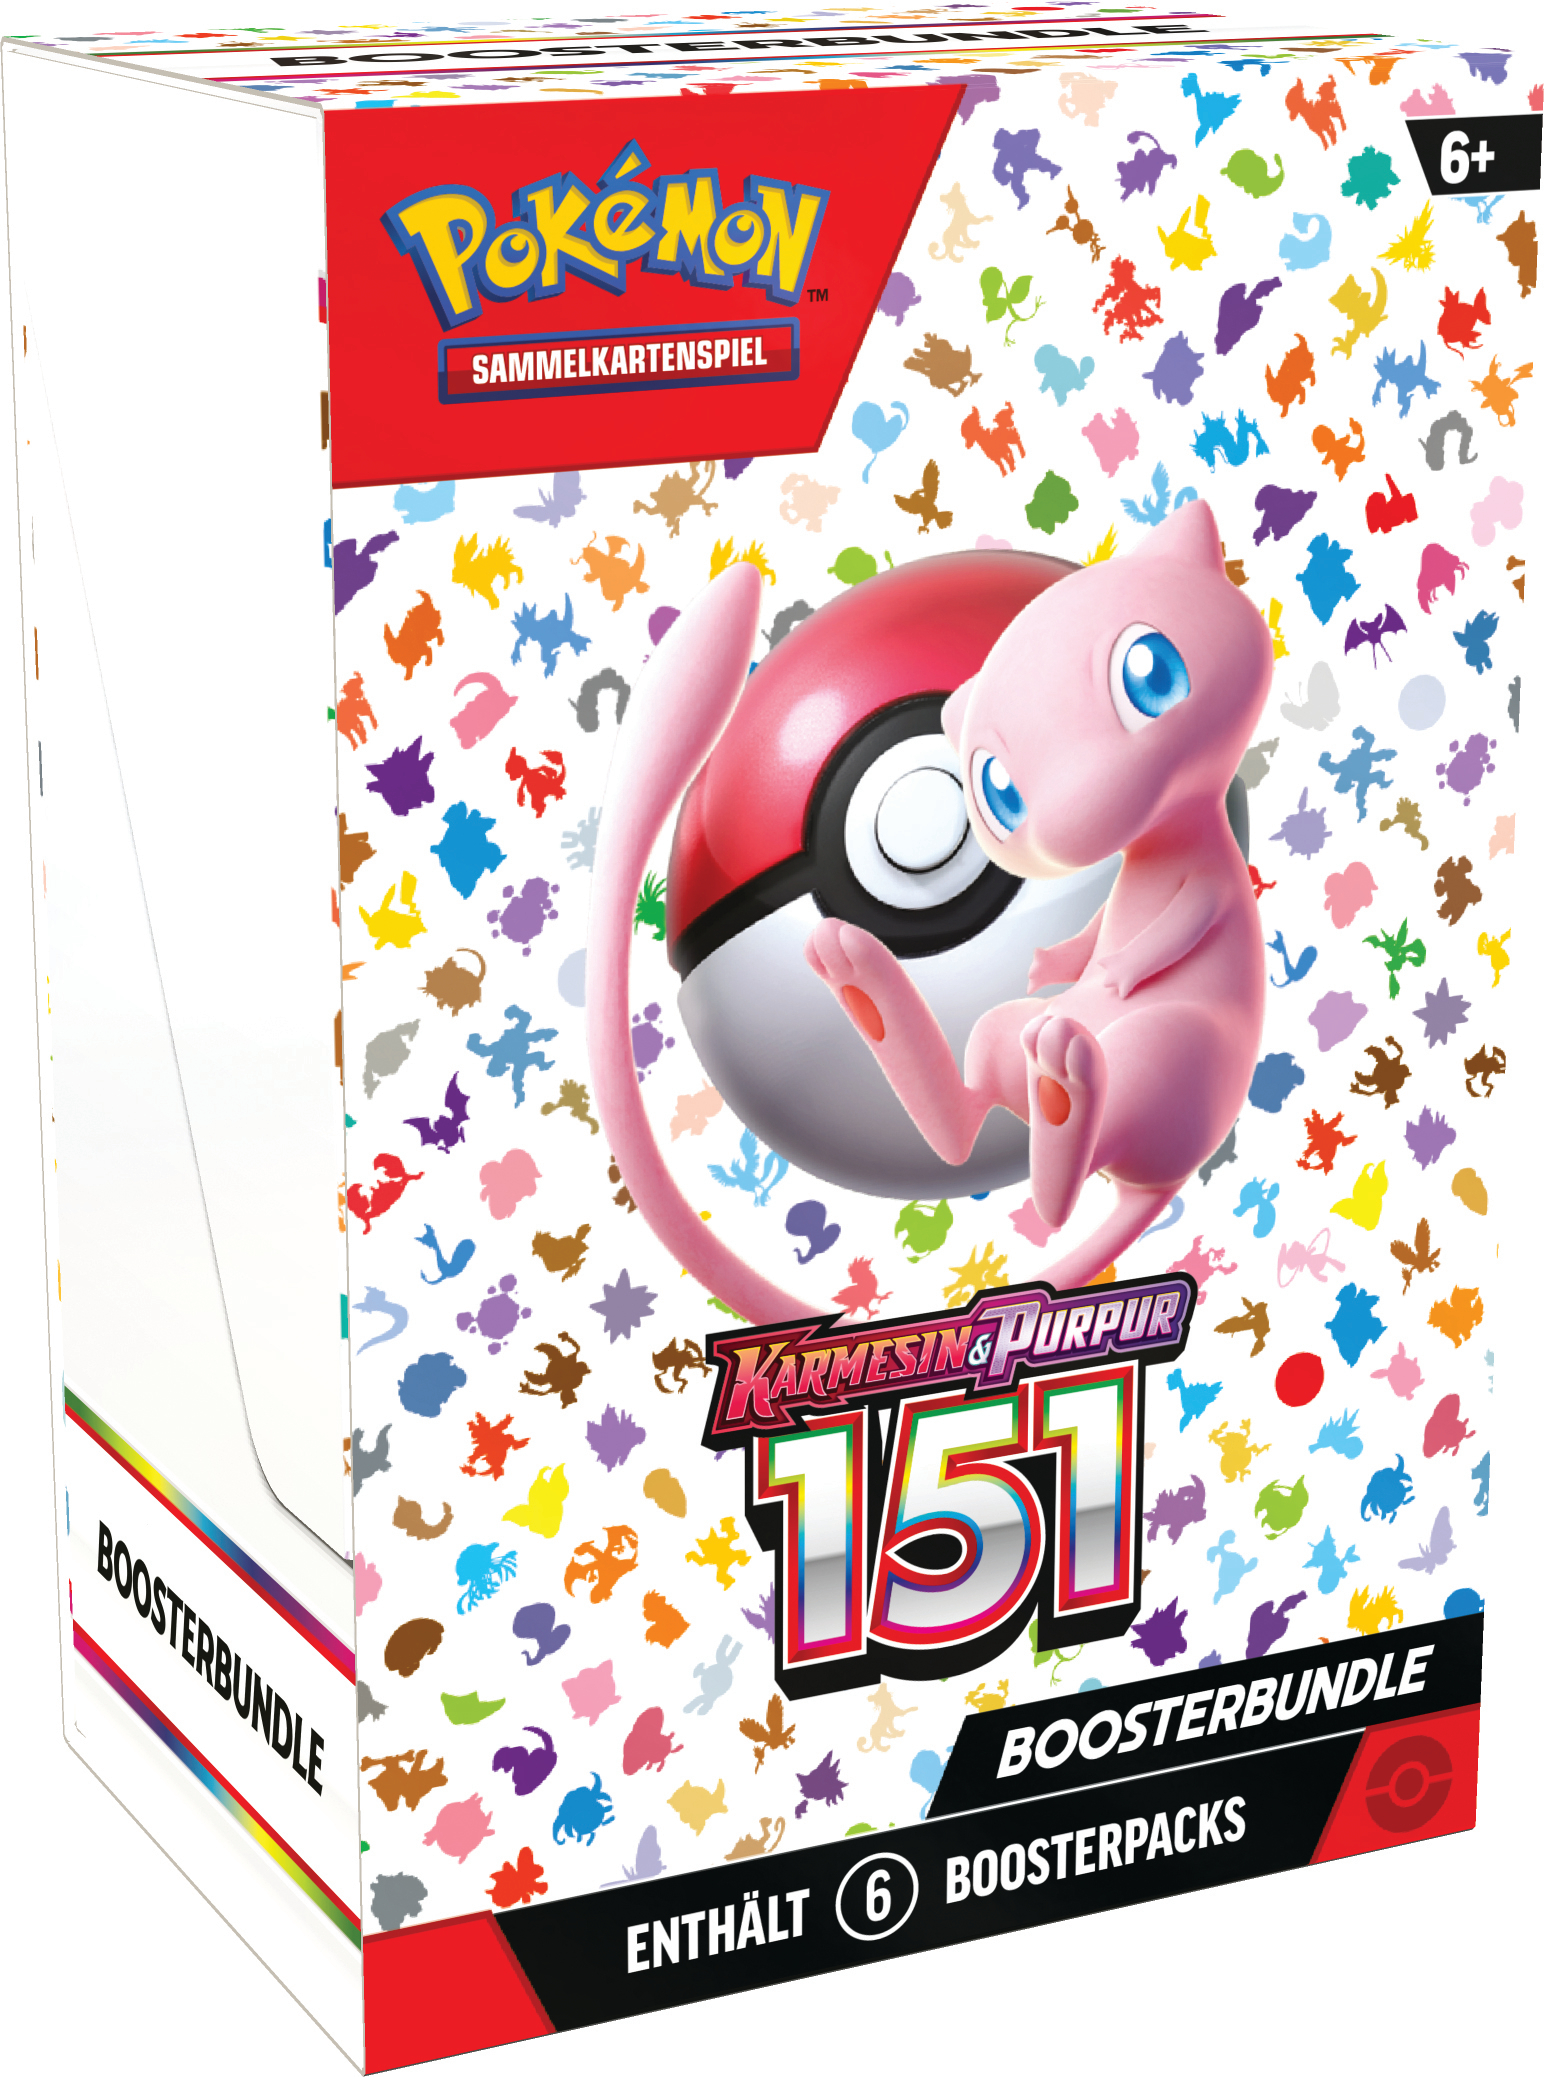 POKEMON Bundle Sammelkarten Booster THE 45562 151 INT. - Pokémon KP03.5 COMPANY